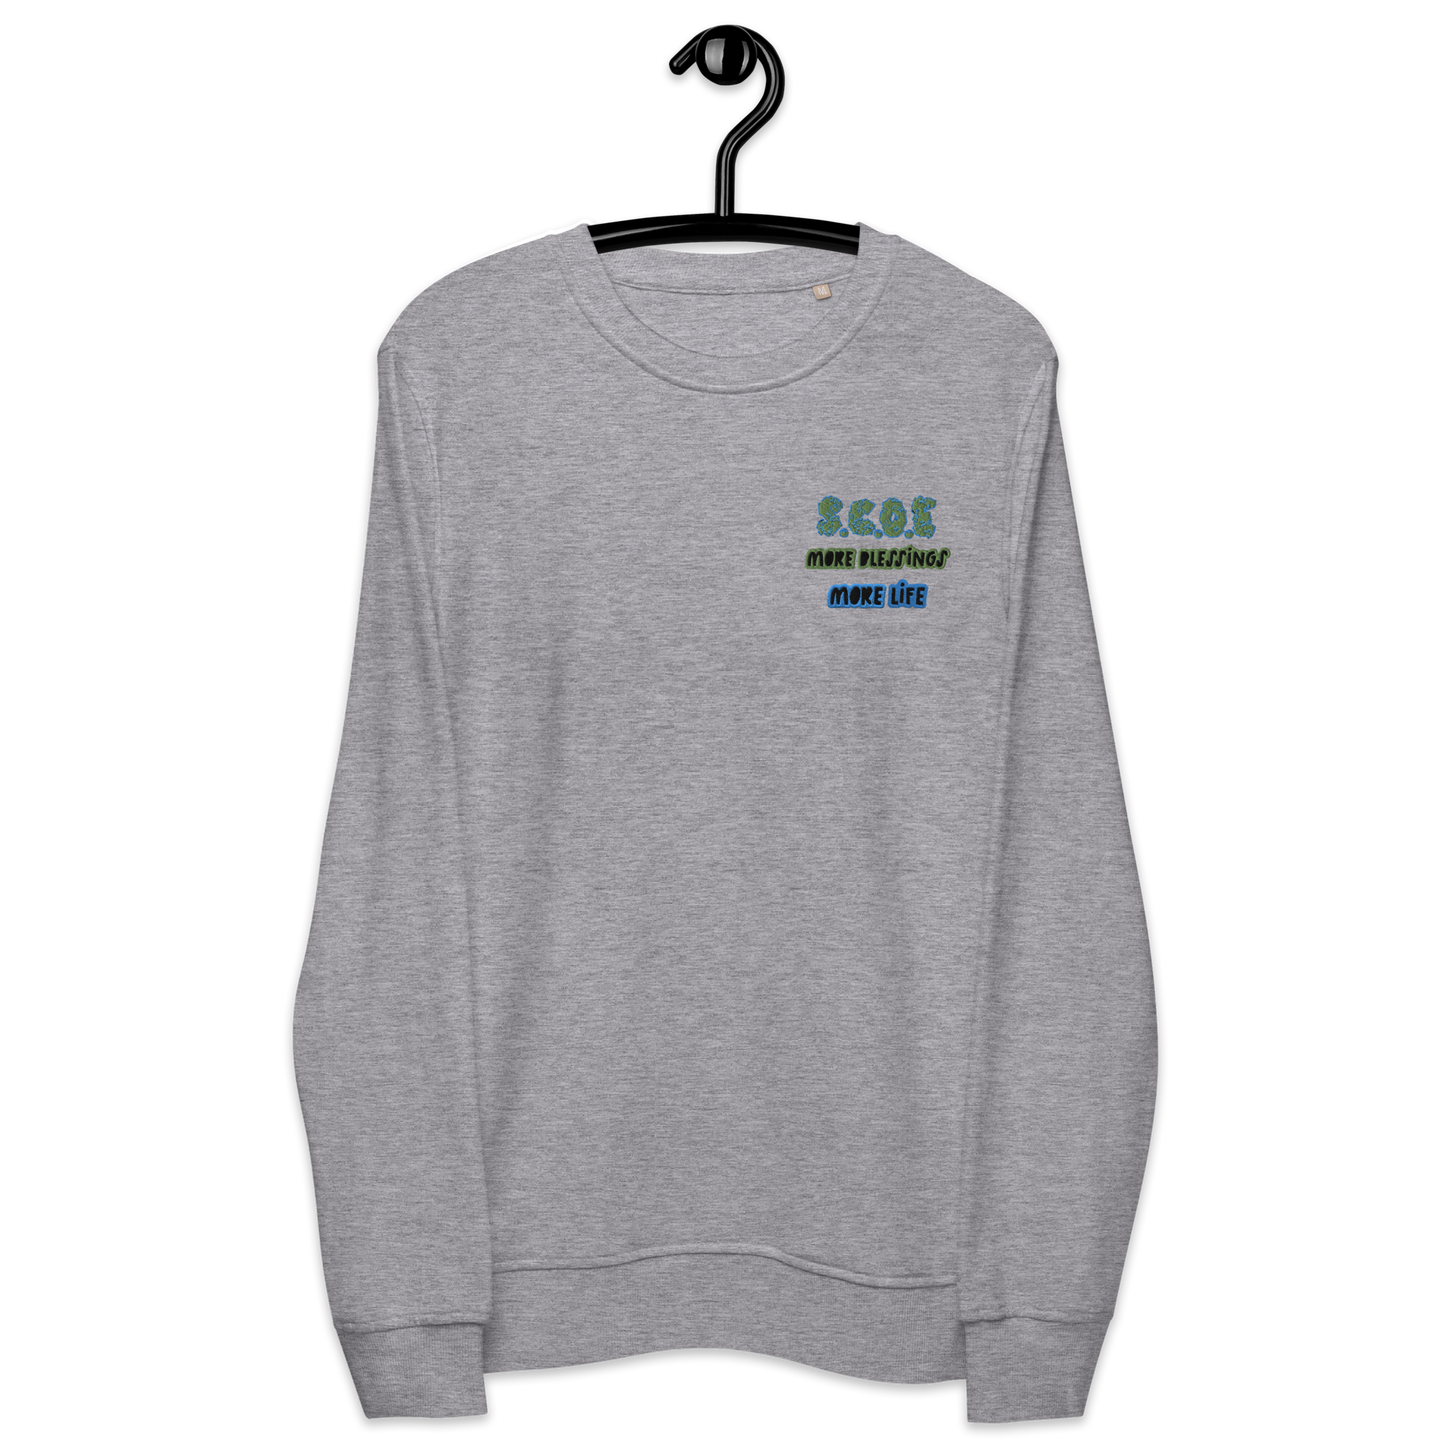 S.C.O.E "More Blessings More Life" Sweatshirt